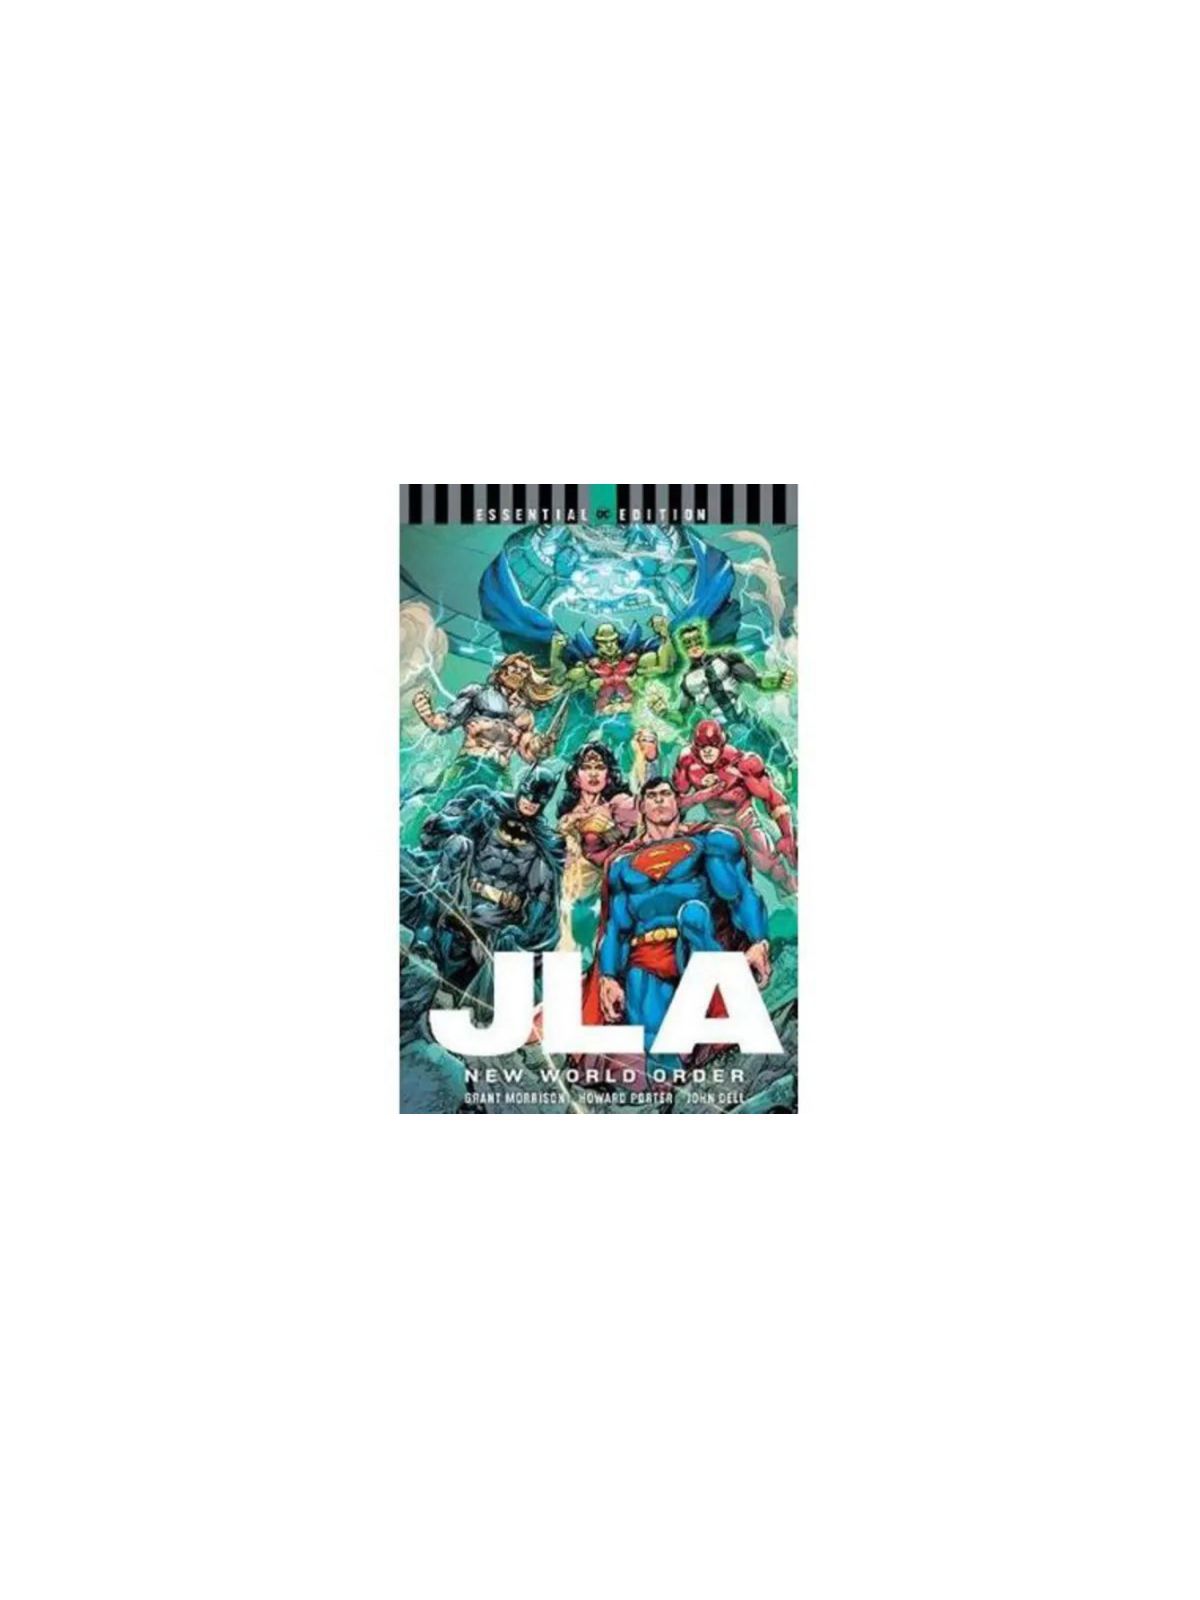 JLA: NEW WORLD ORDER (DC ESSENTIAL EDITION) MORRISON, GRANT Купить Книгу на Английском